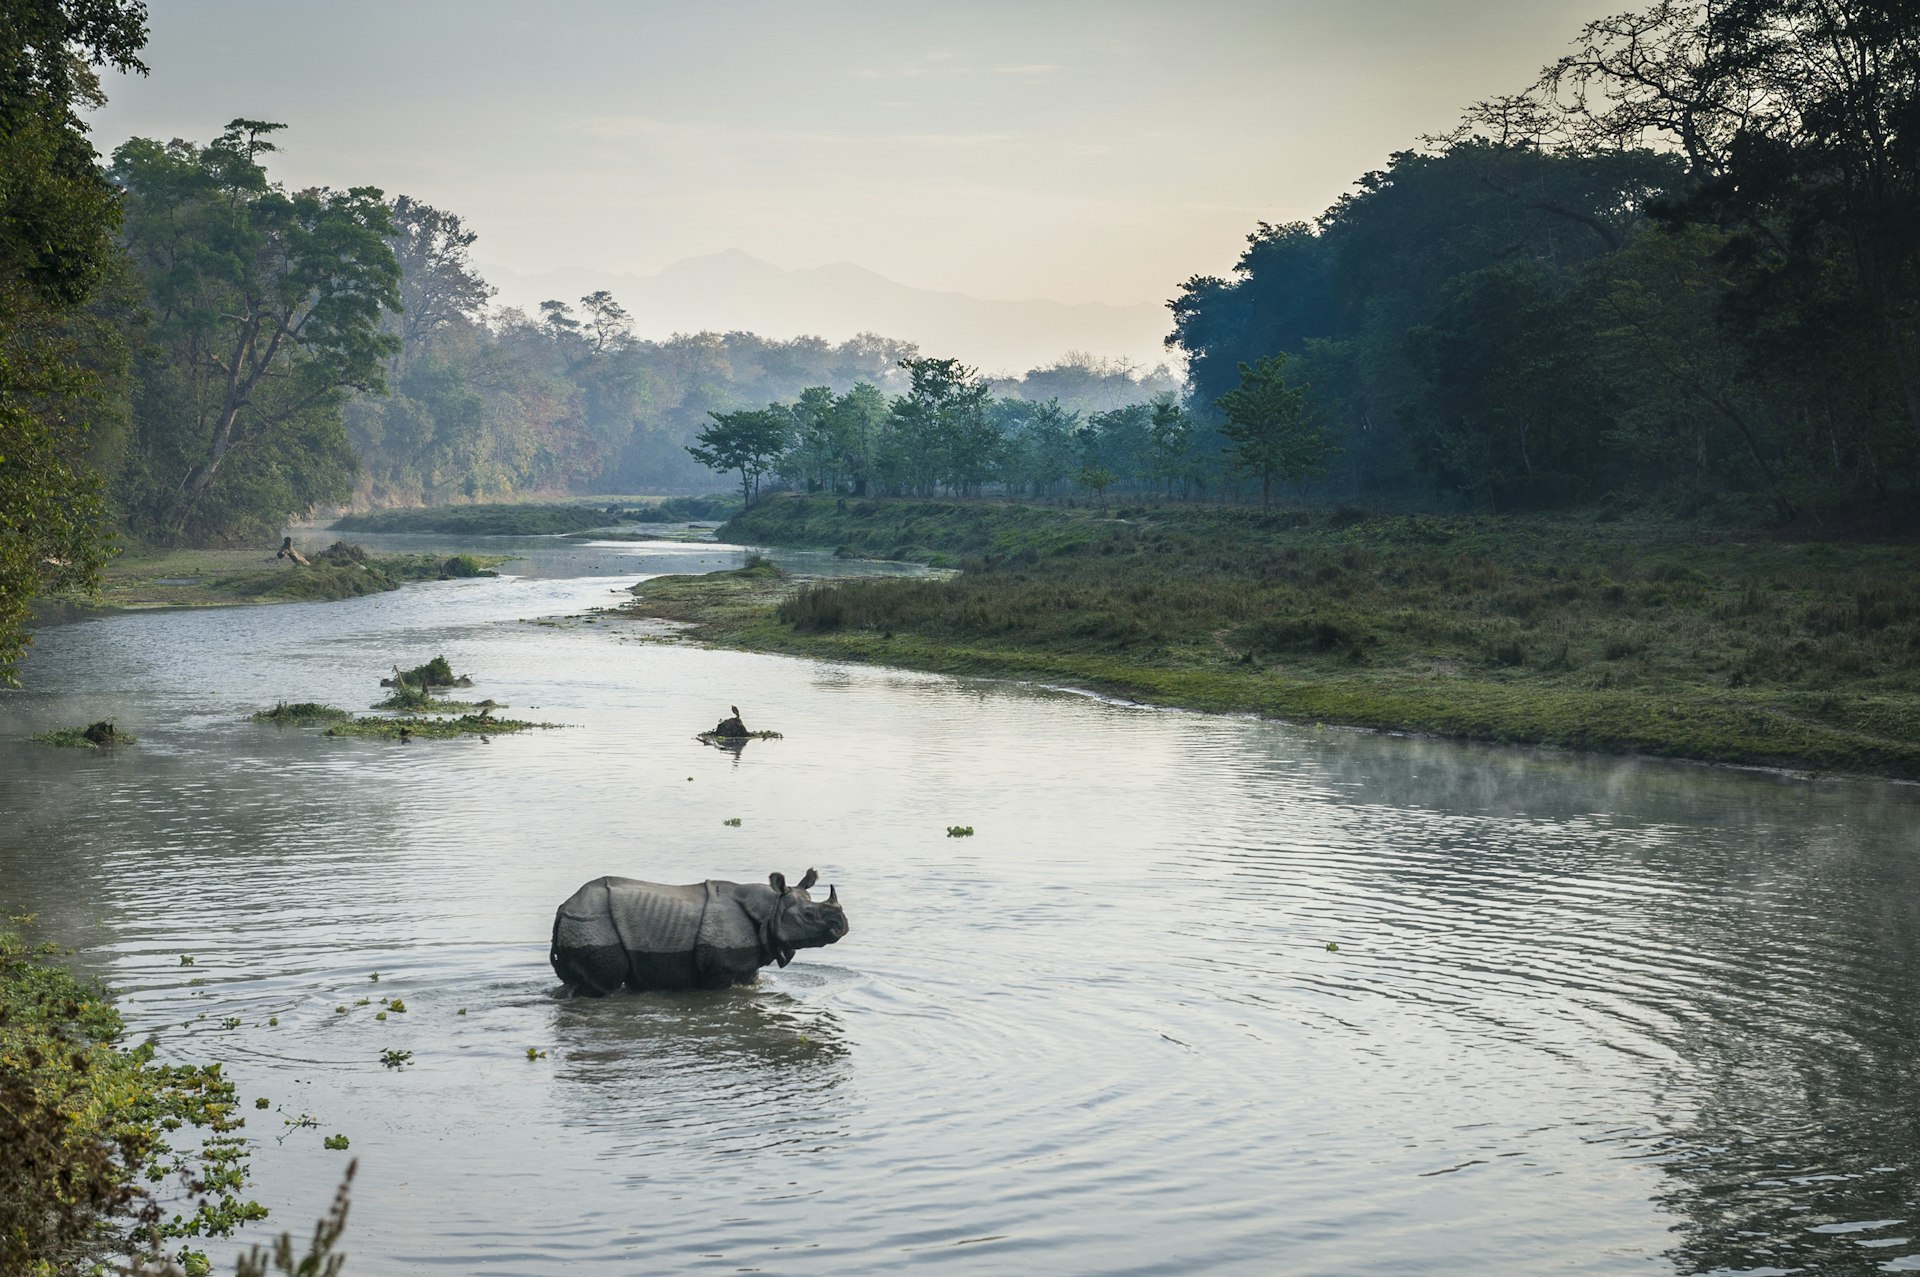 A rhinoceros crossing river at sunrise, Chitwan National Park, Nepal